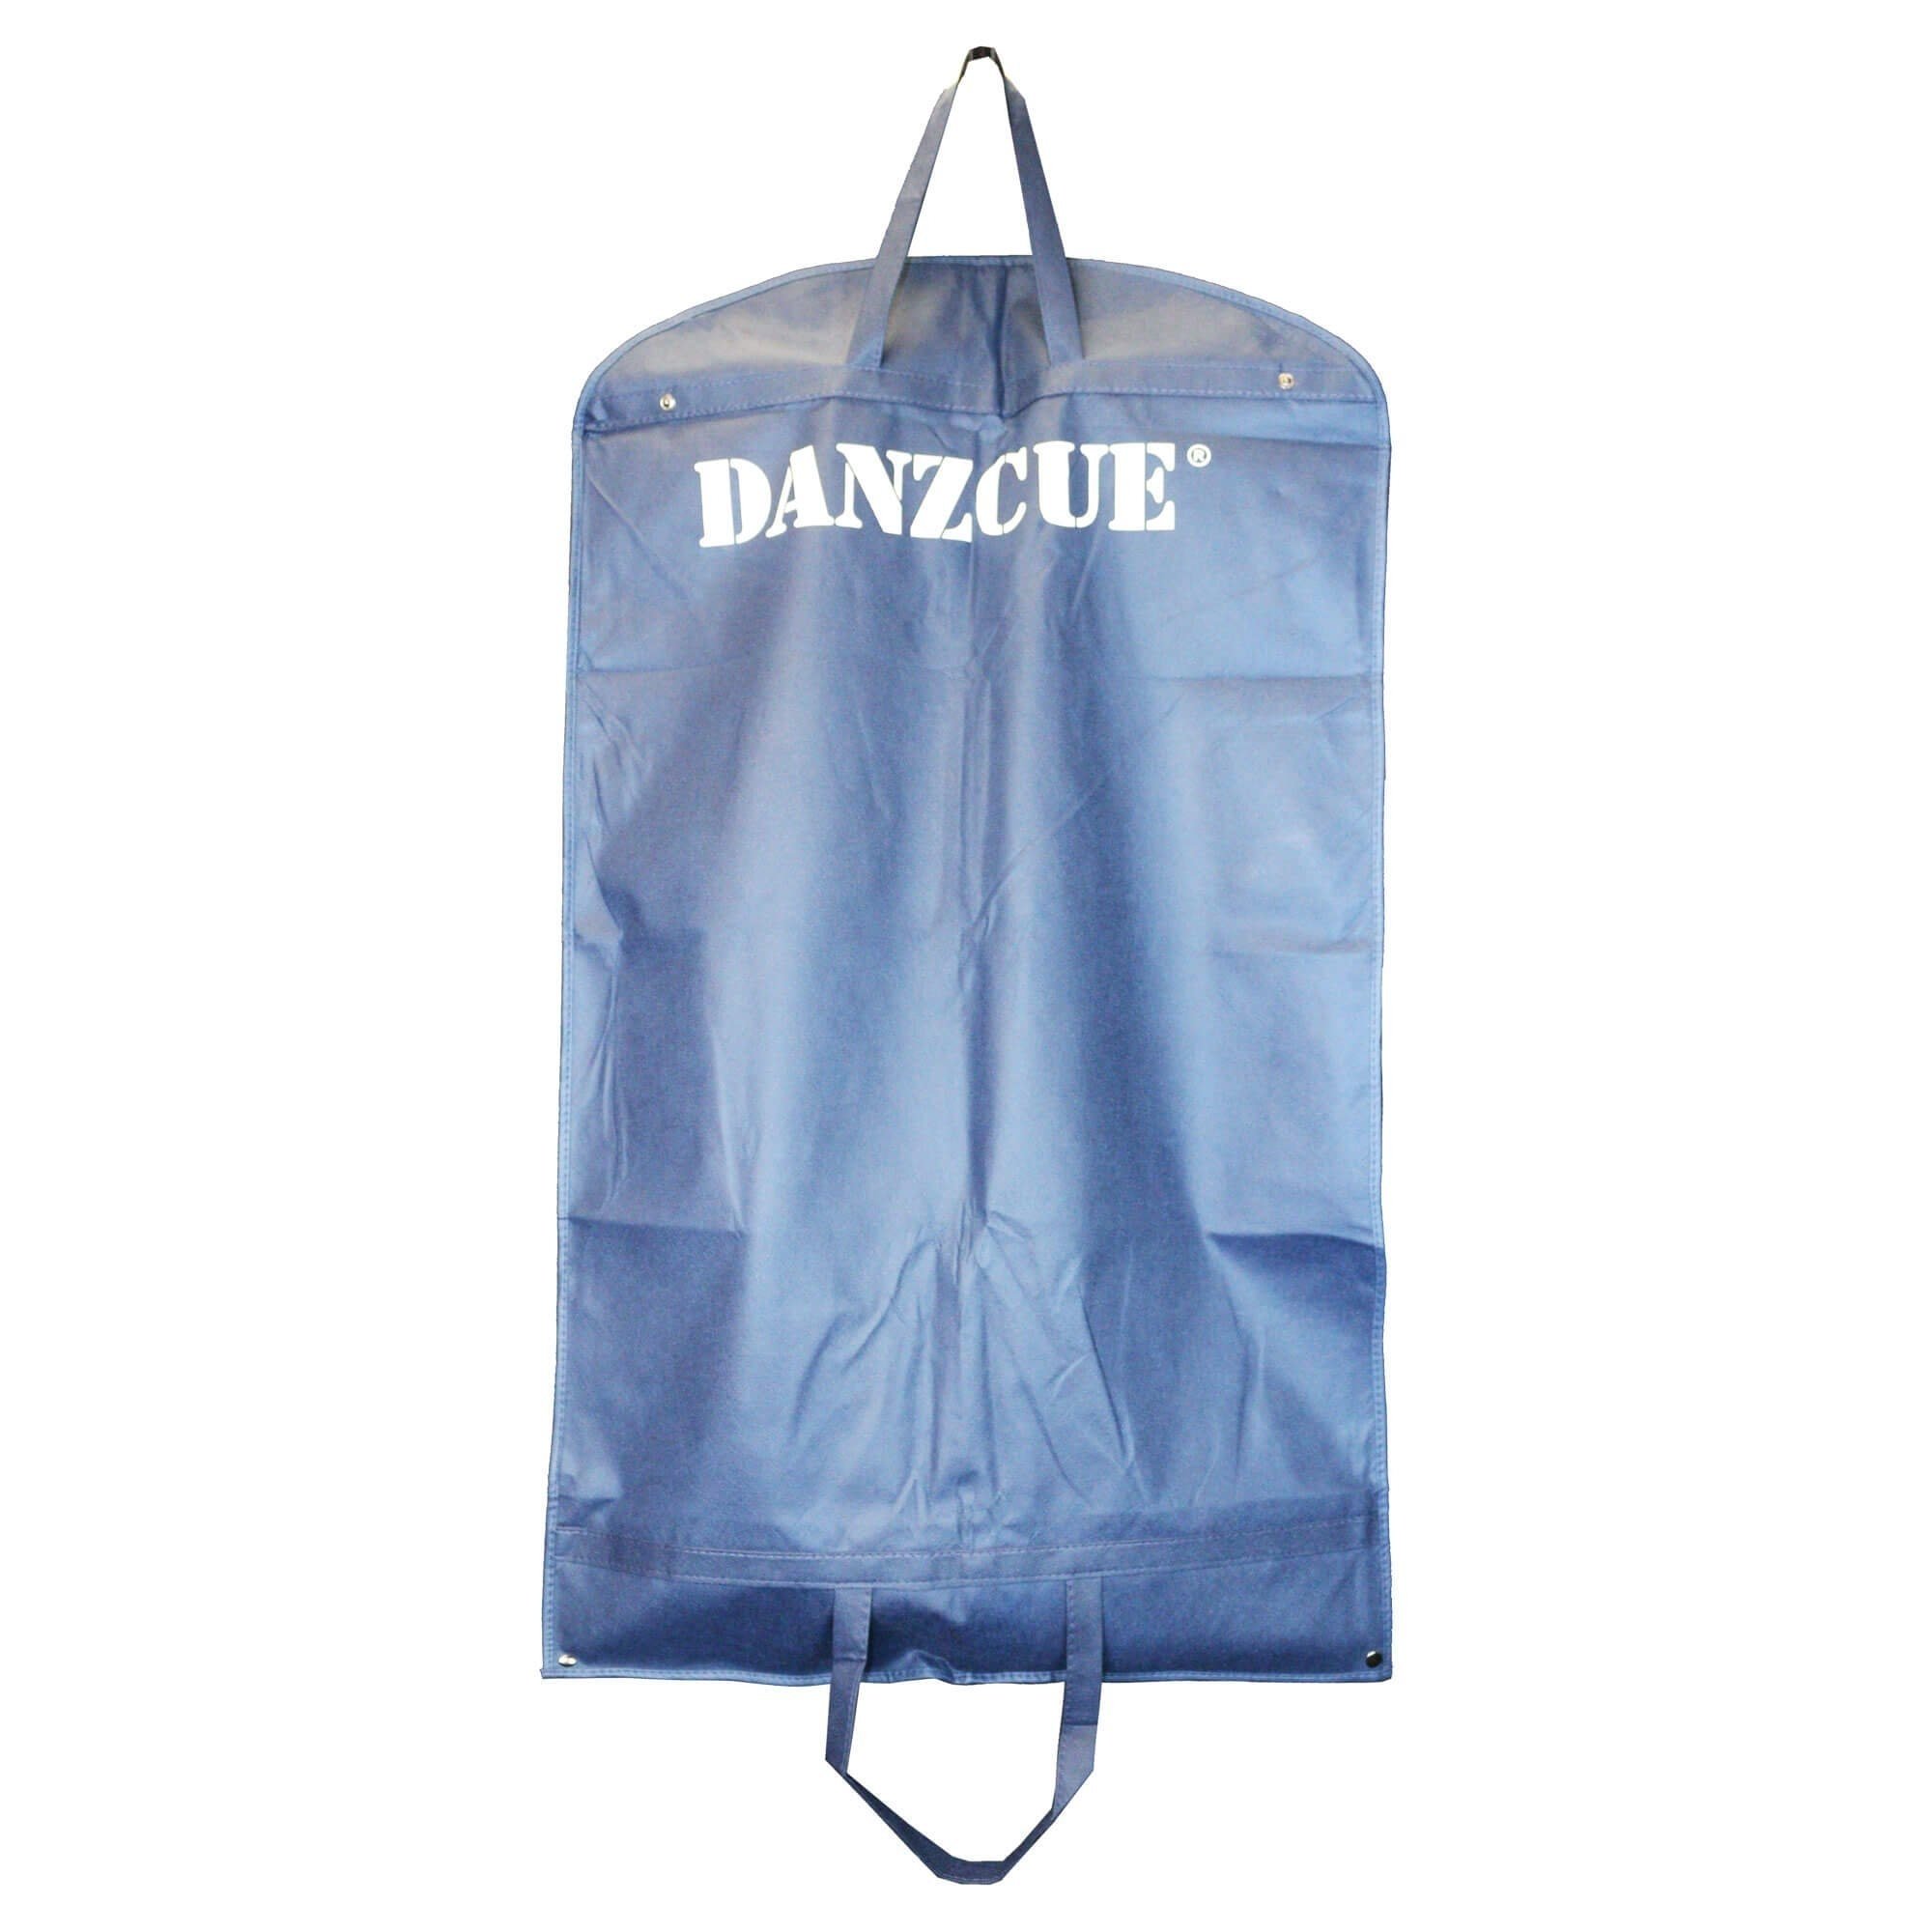 Danzcue "DANZCUE" Garment Bag - Click Image to Close